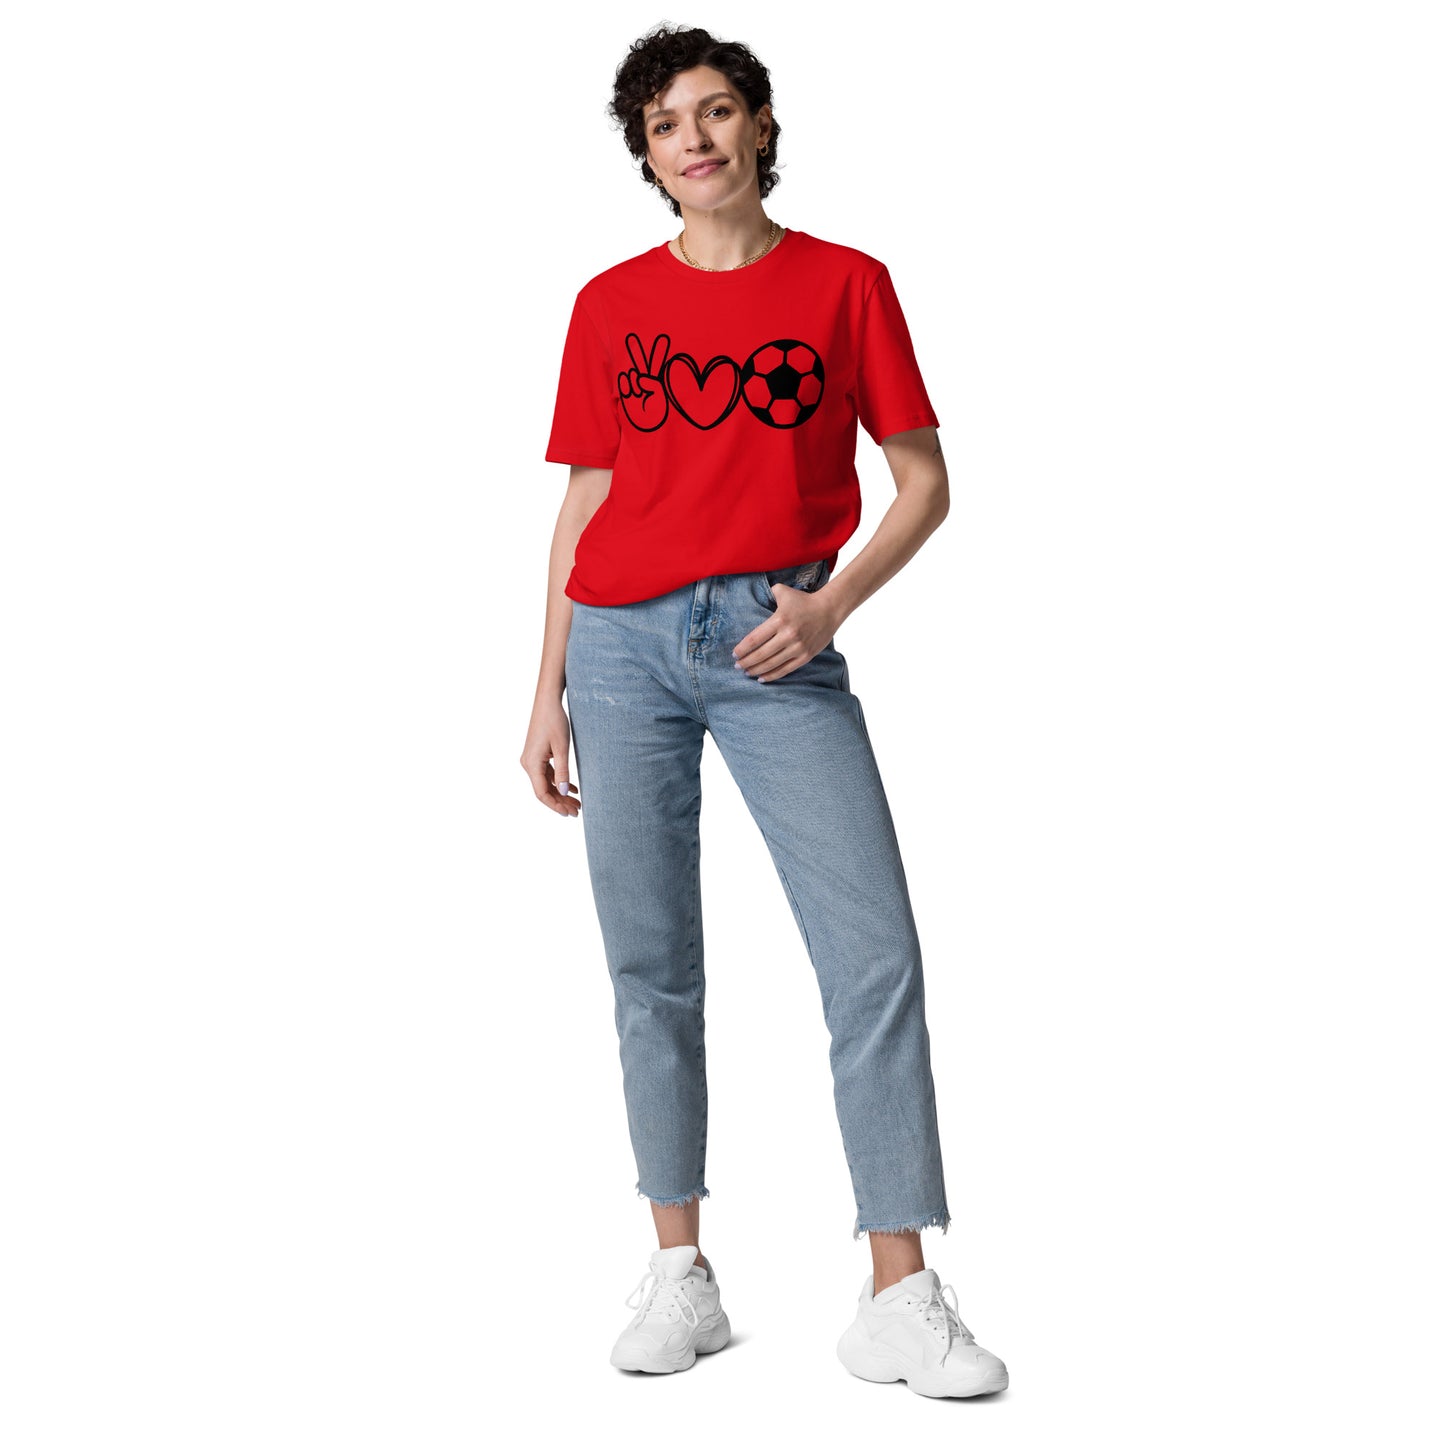 Love Soccer - Unisex organic cotton t-shirt